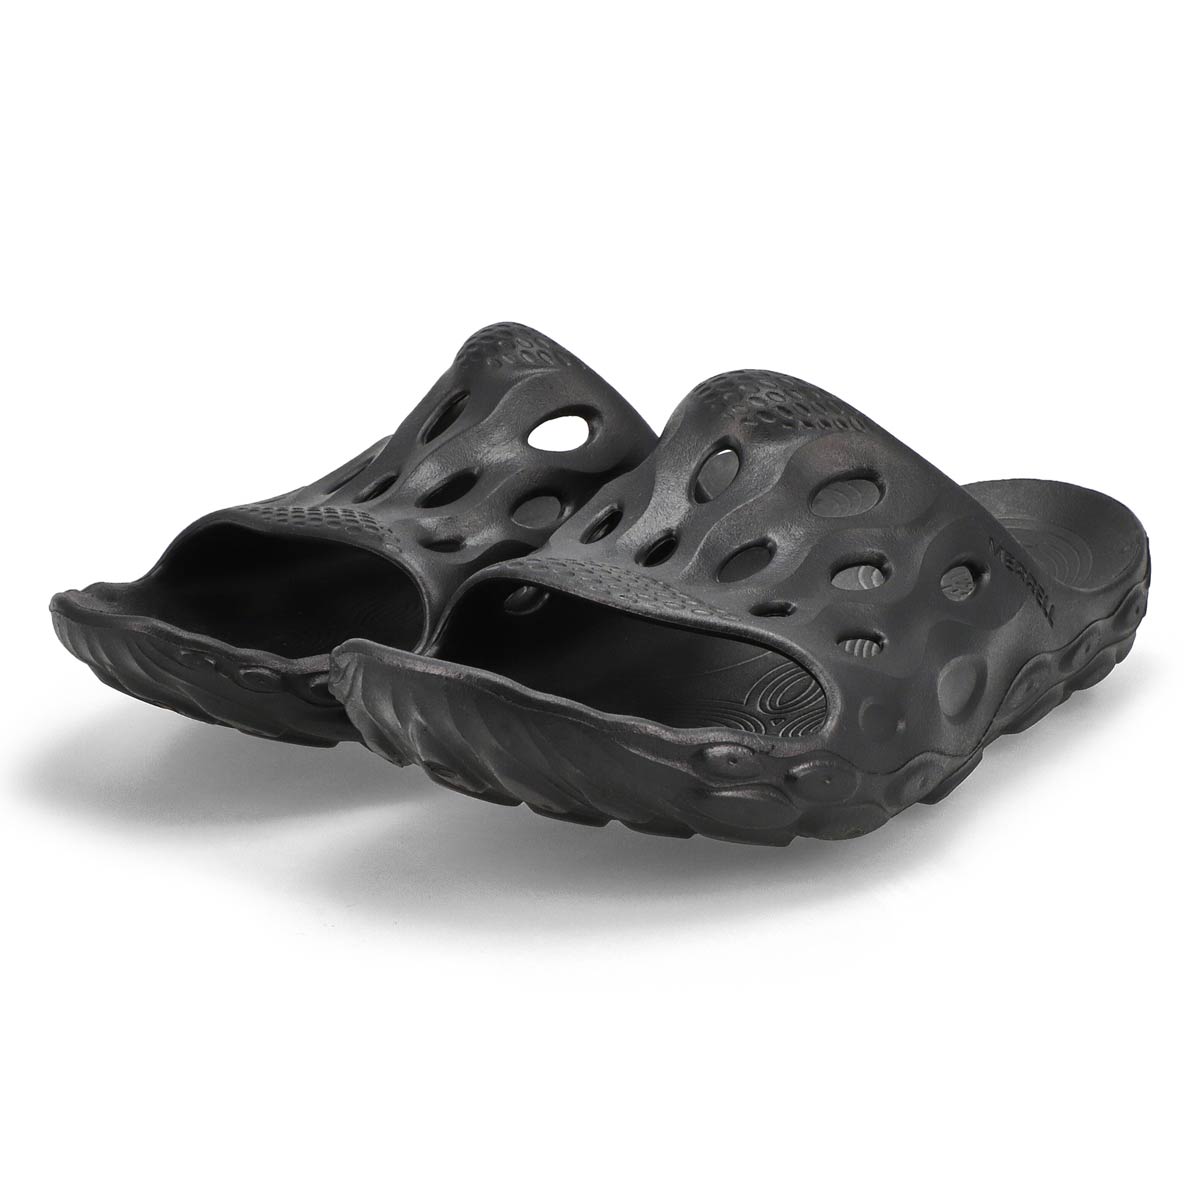 Merrell Mns Hydro Slide Casual Sandal - Black | SoftMoc.com